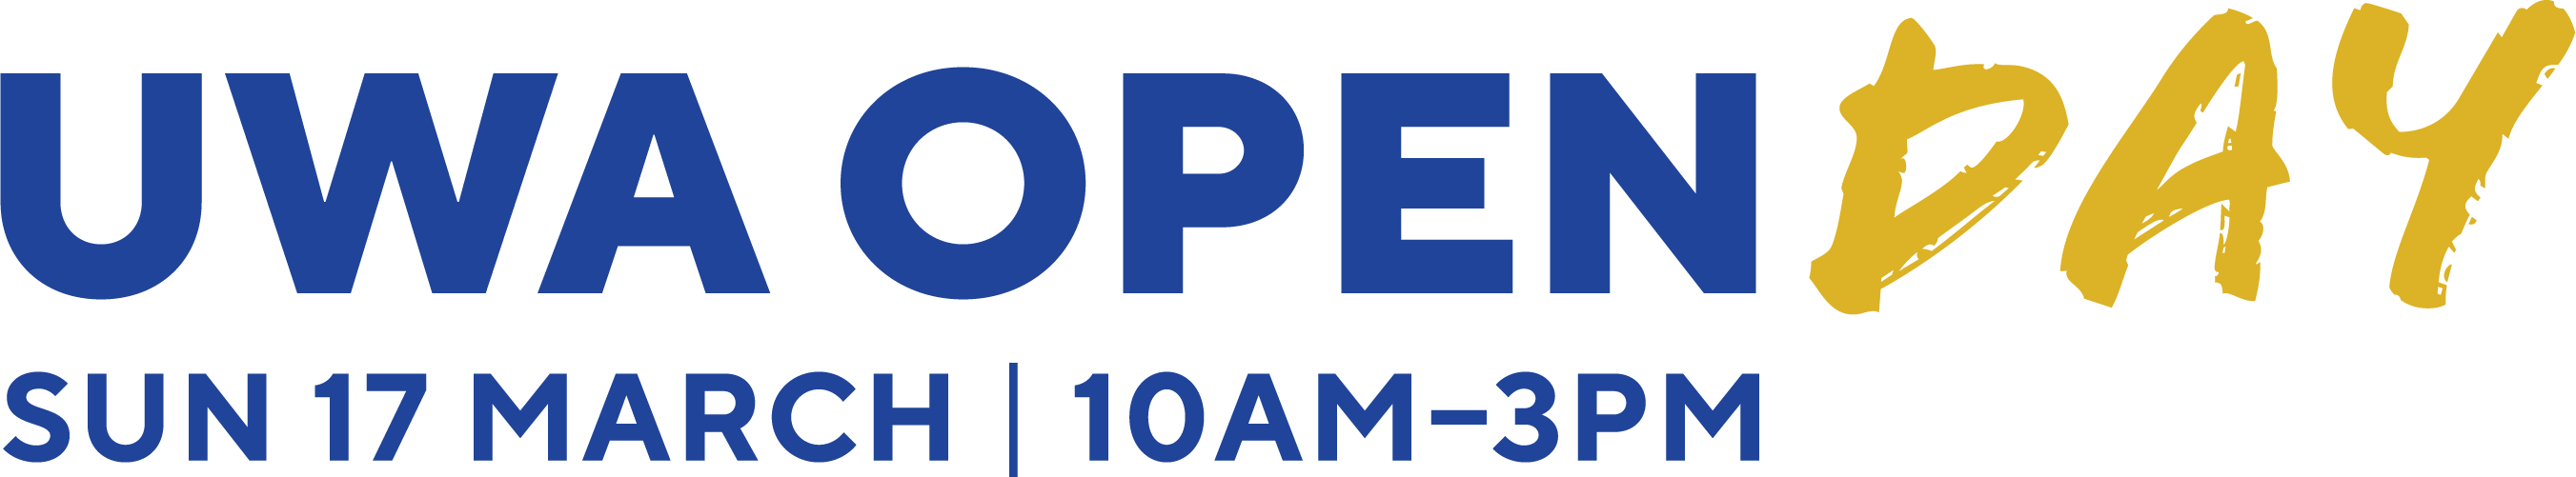 uwa open day logo lockup 